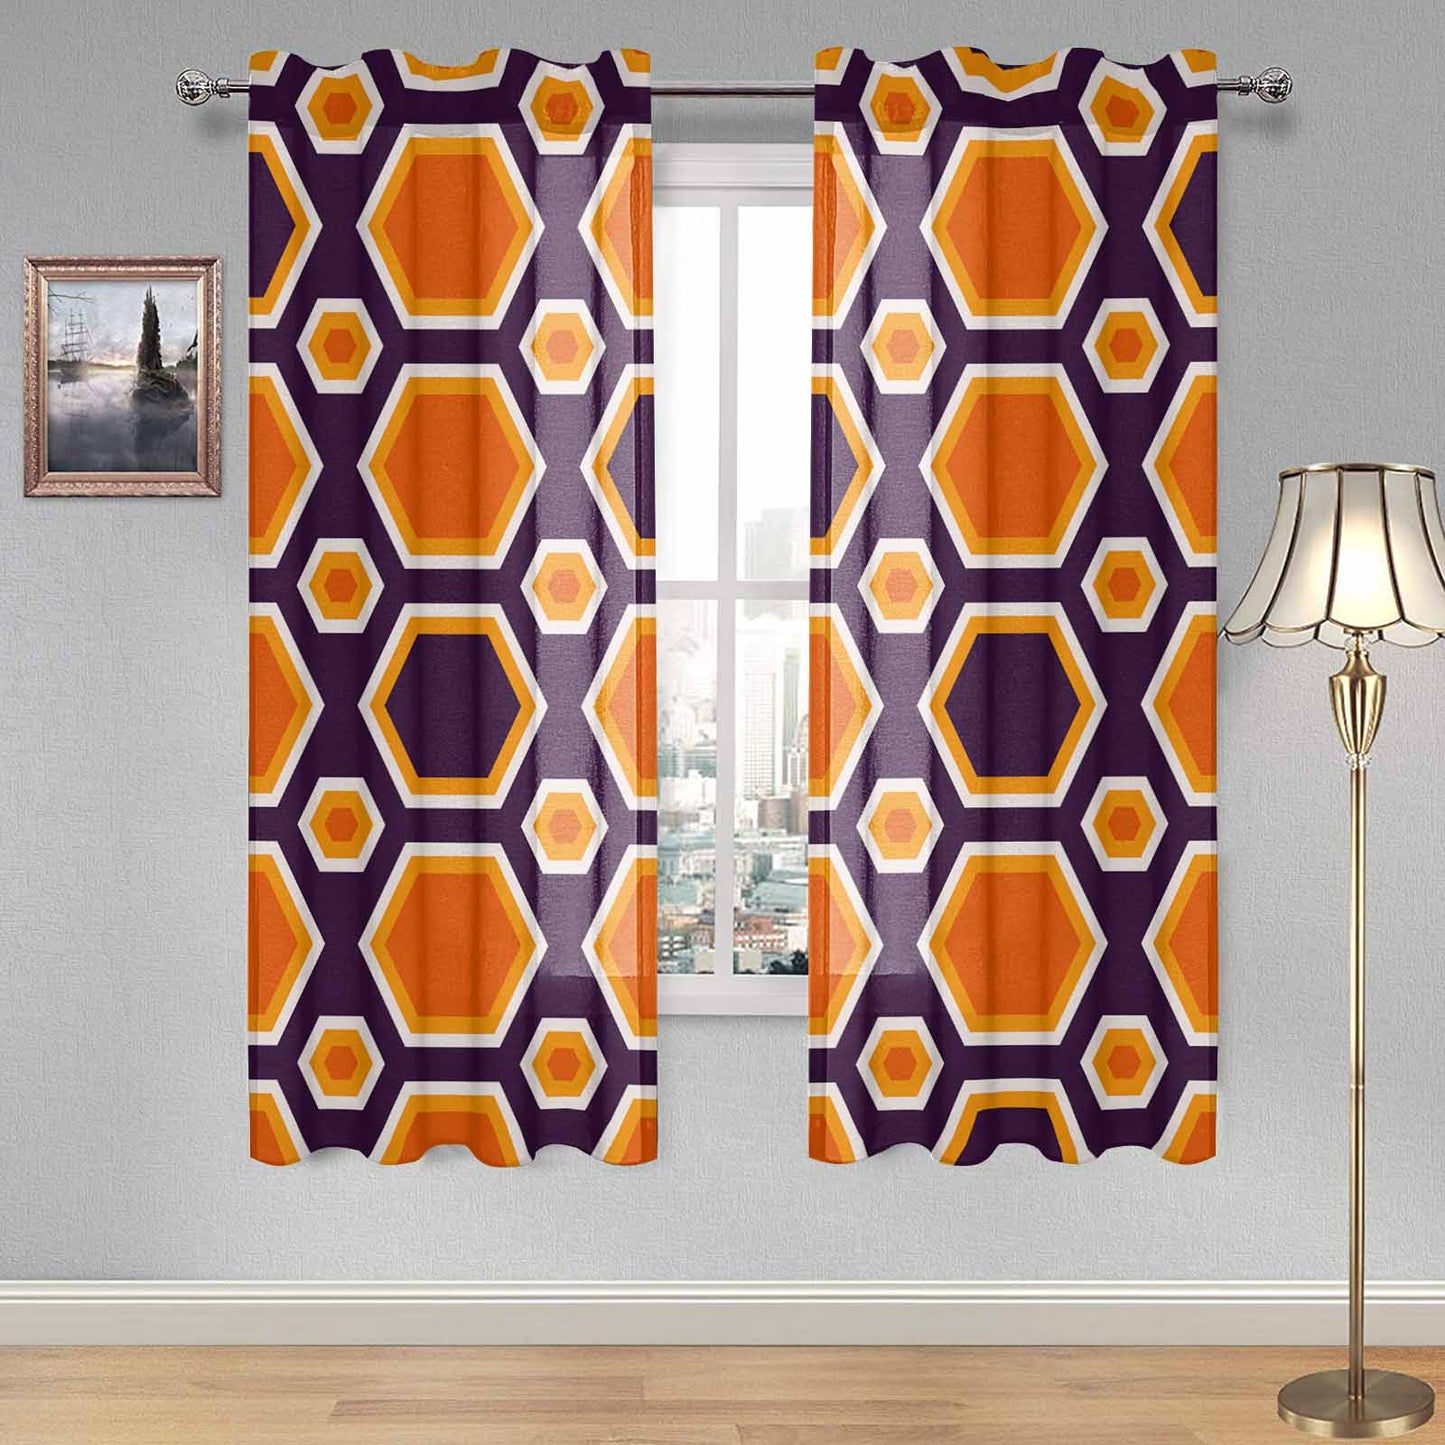 Sheer 2-Panel Window Curtains in Mid Century Modern Geometric Halloween Orange